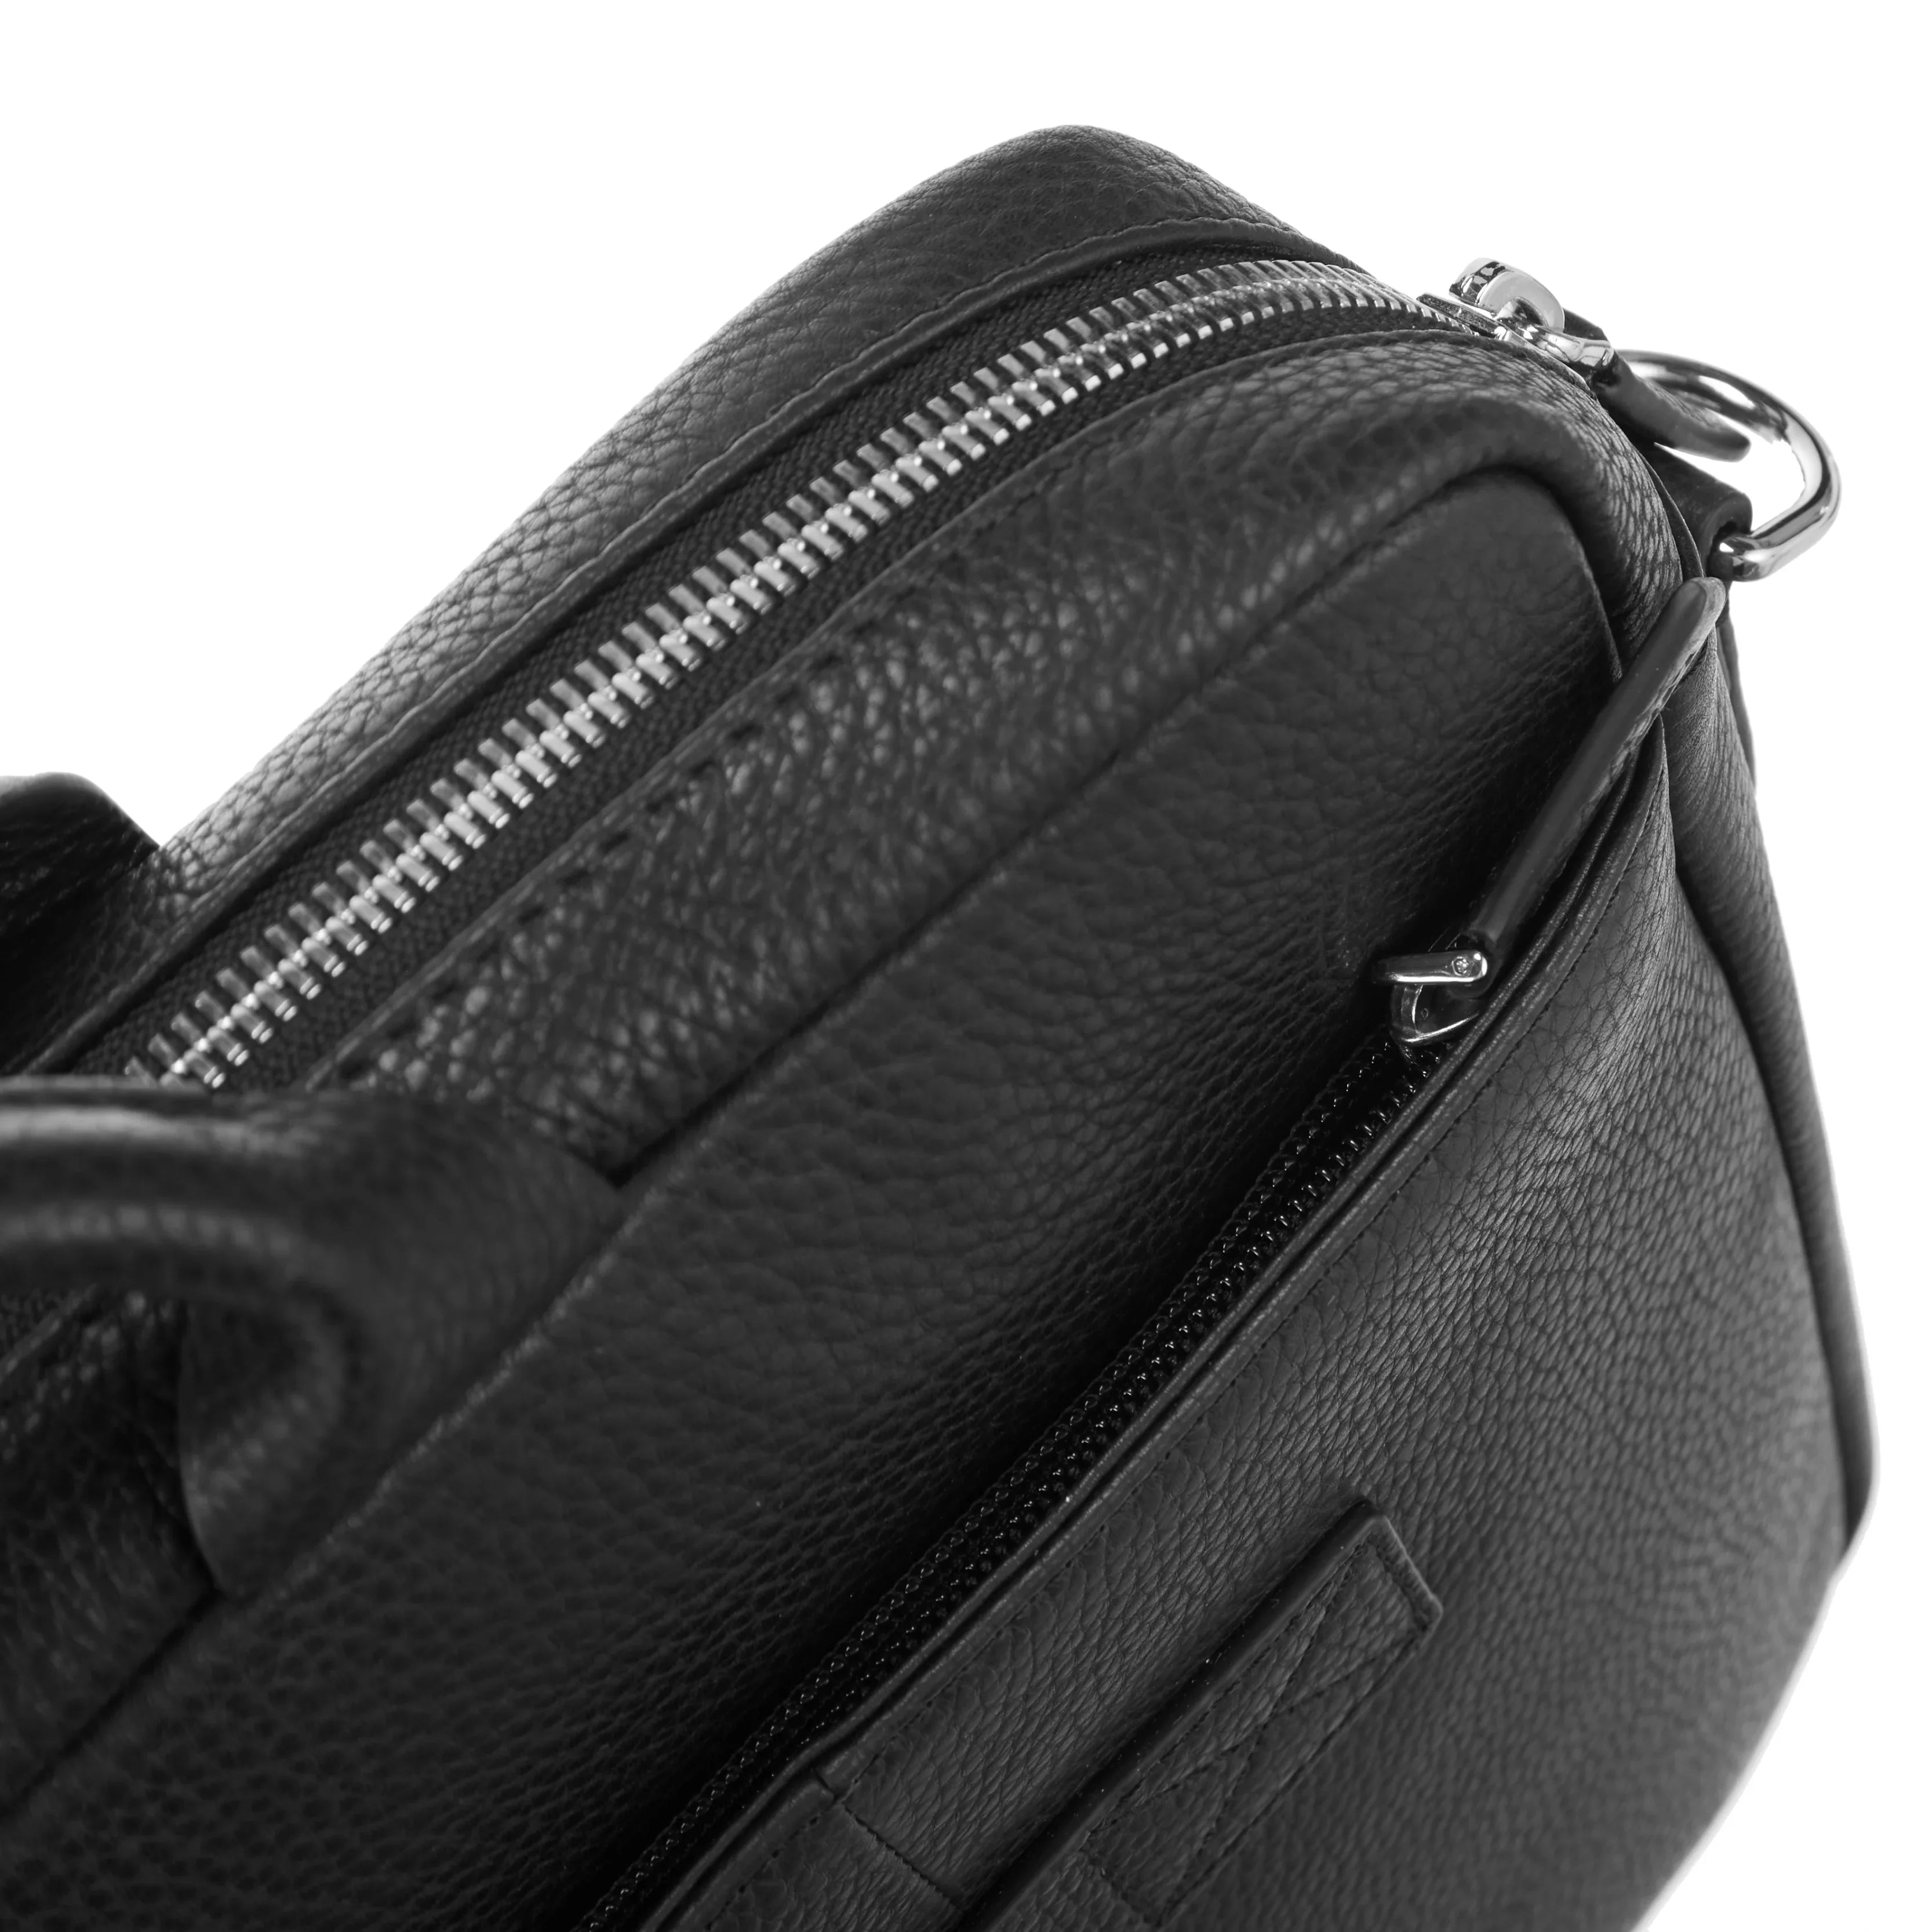 Joop Cardona Pandion Briefbag SHZ1 39 cm - Black